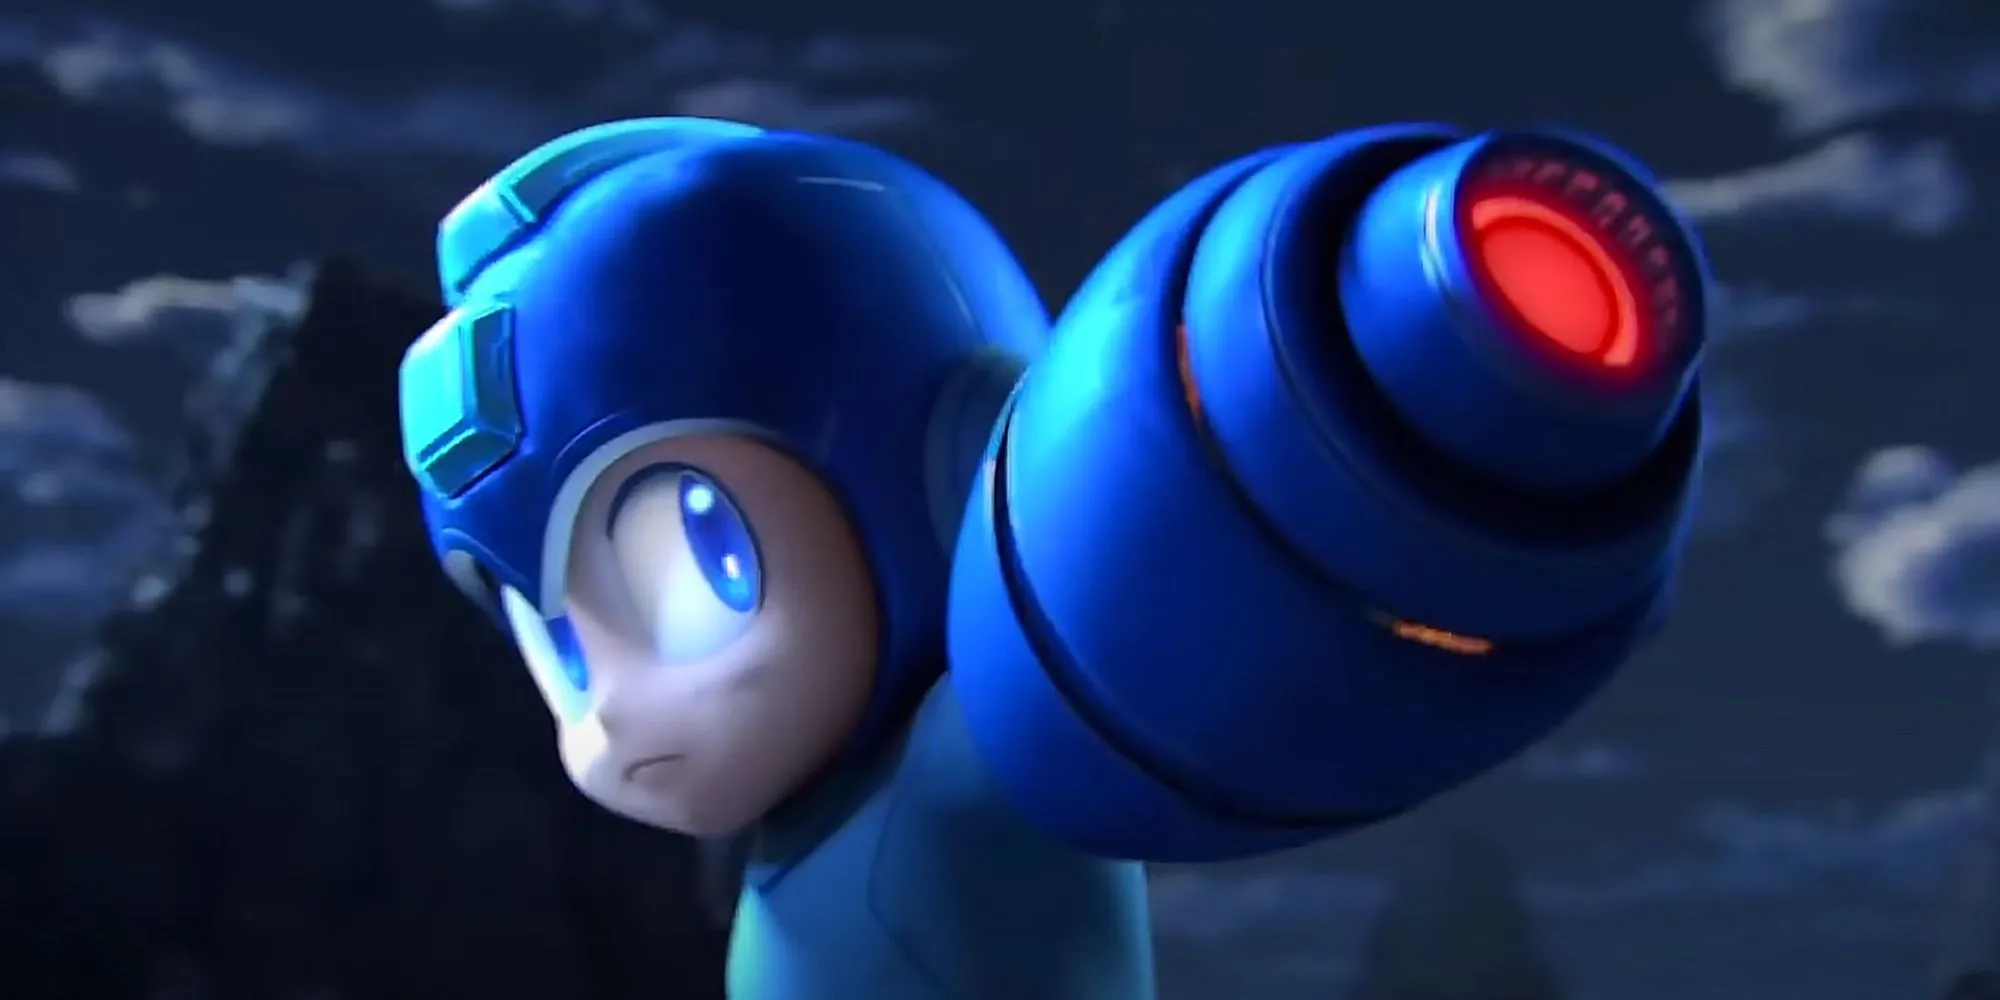 The Mega Buster sostenido por Mega Man